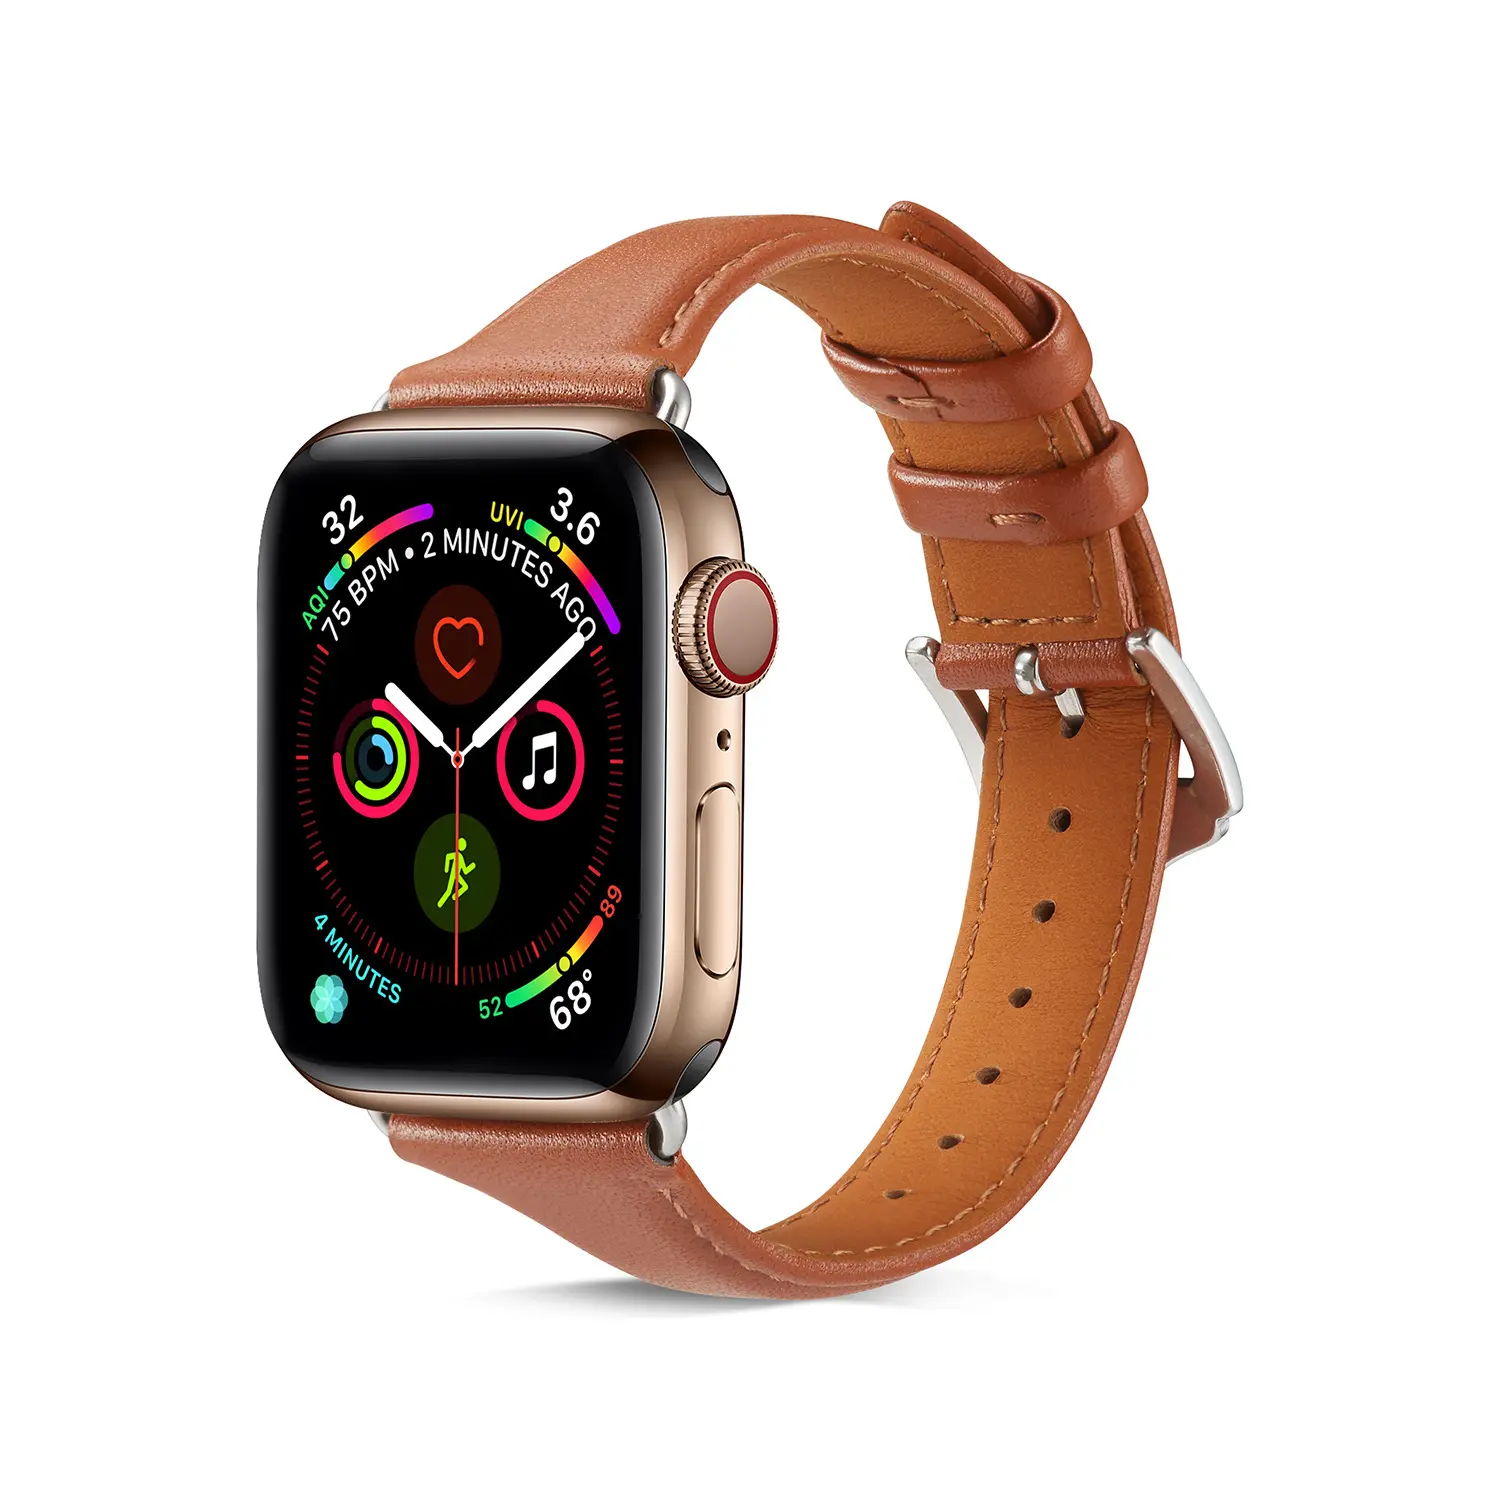 Grosir Mewah Banda De Reloj Apple Watch Band Kulit Smart Watch Band & Aksesori untuk Apple Watch Band